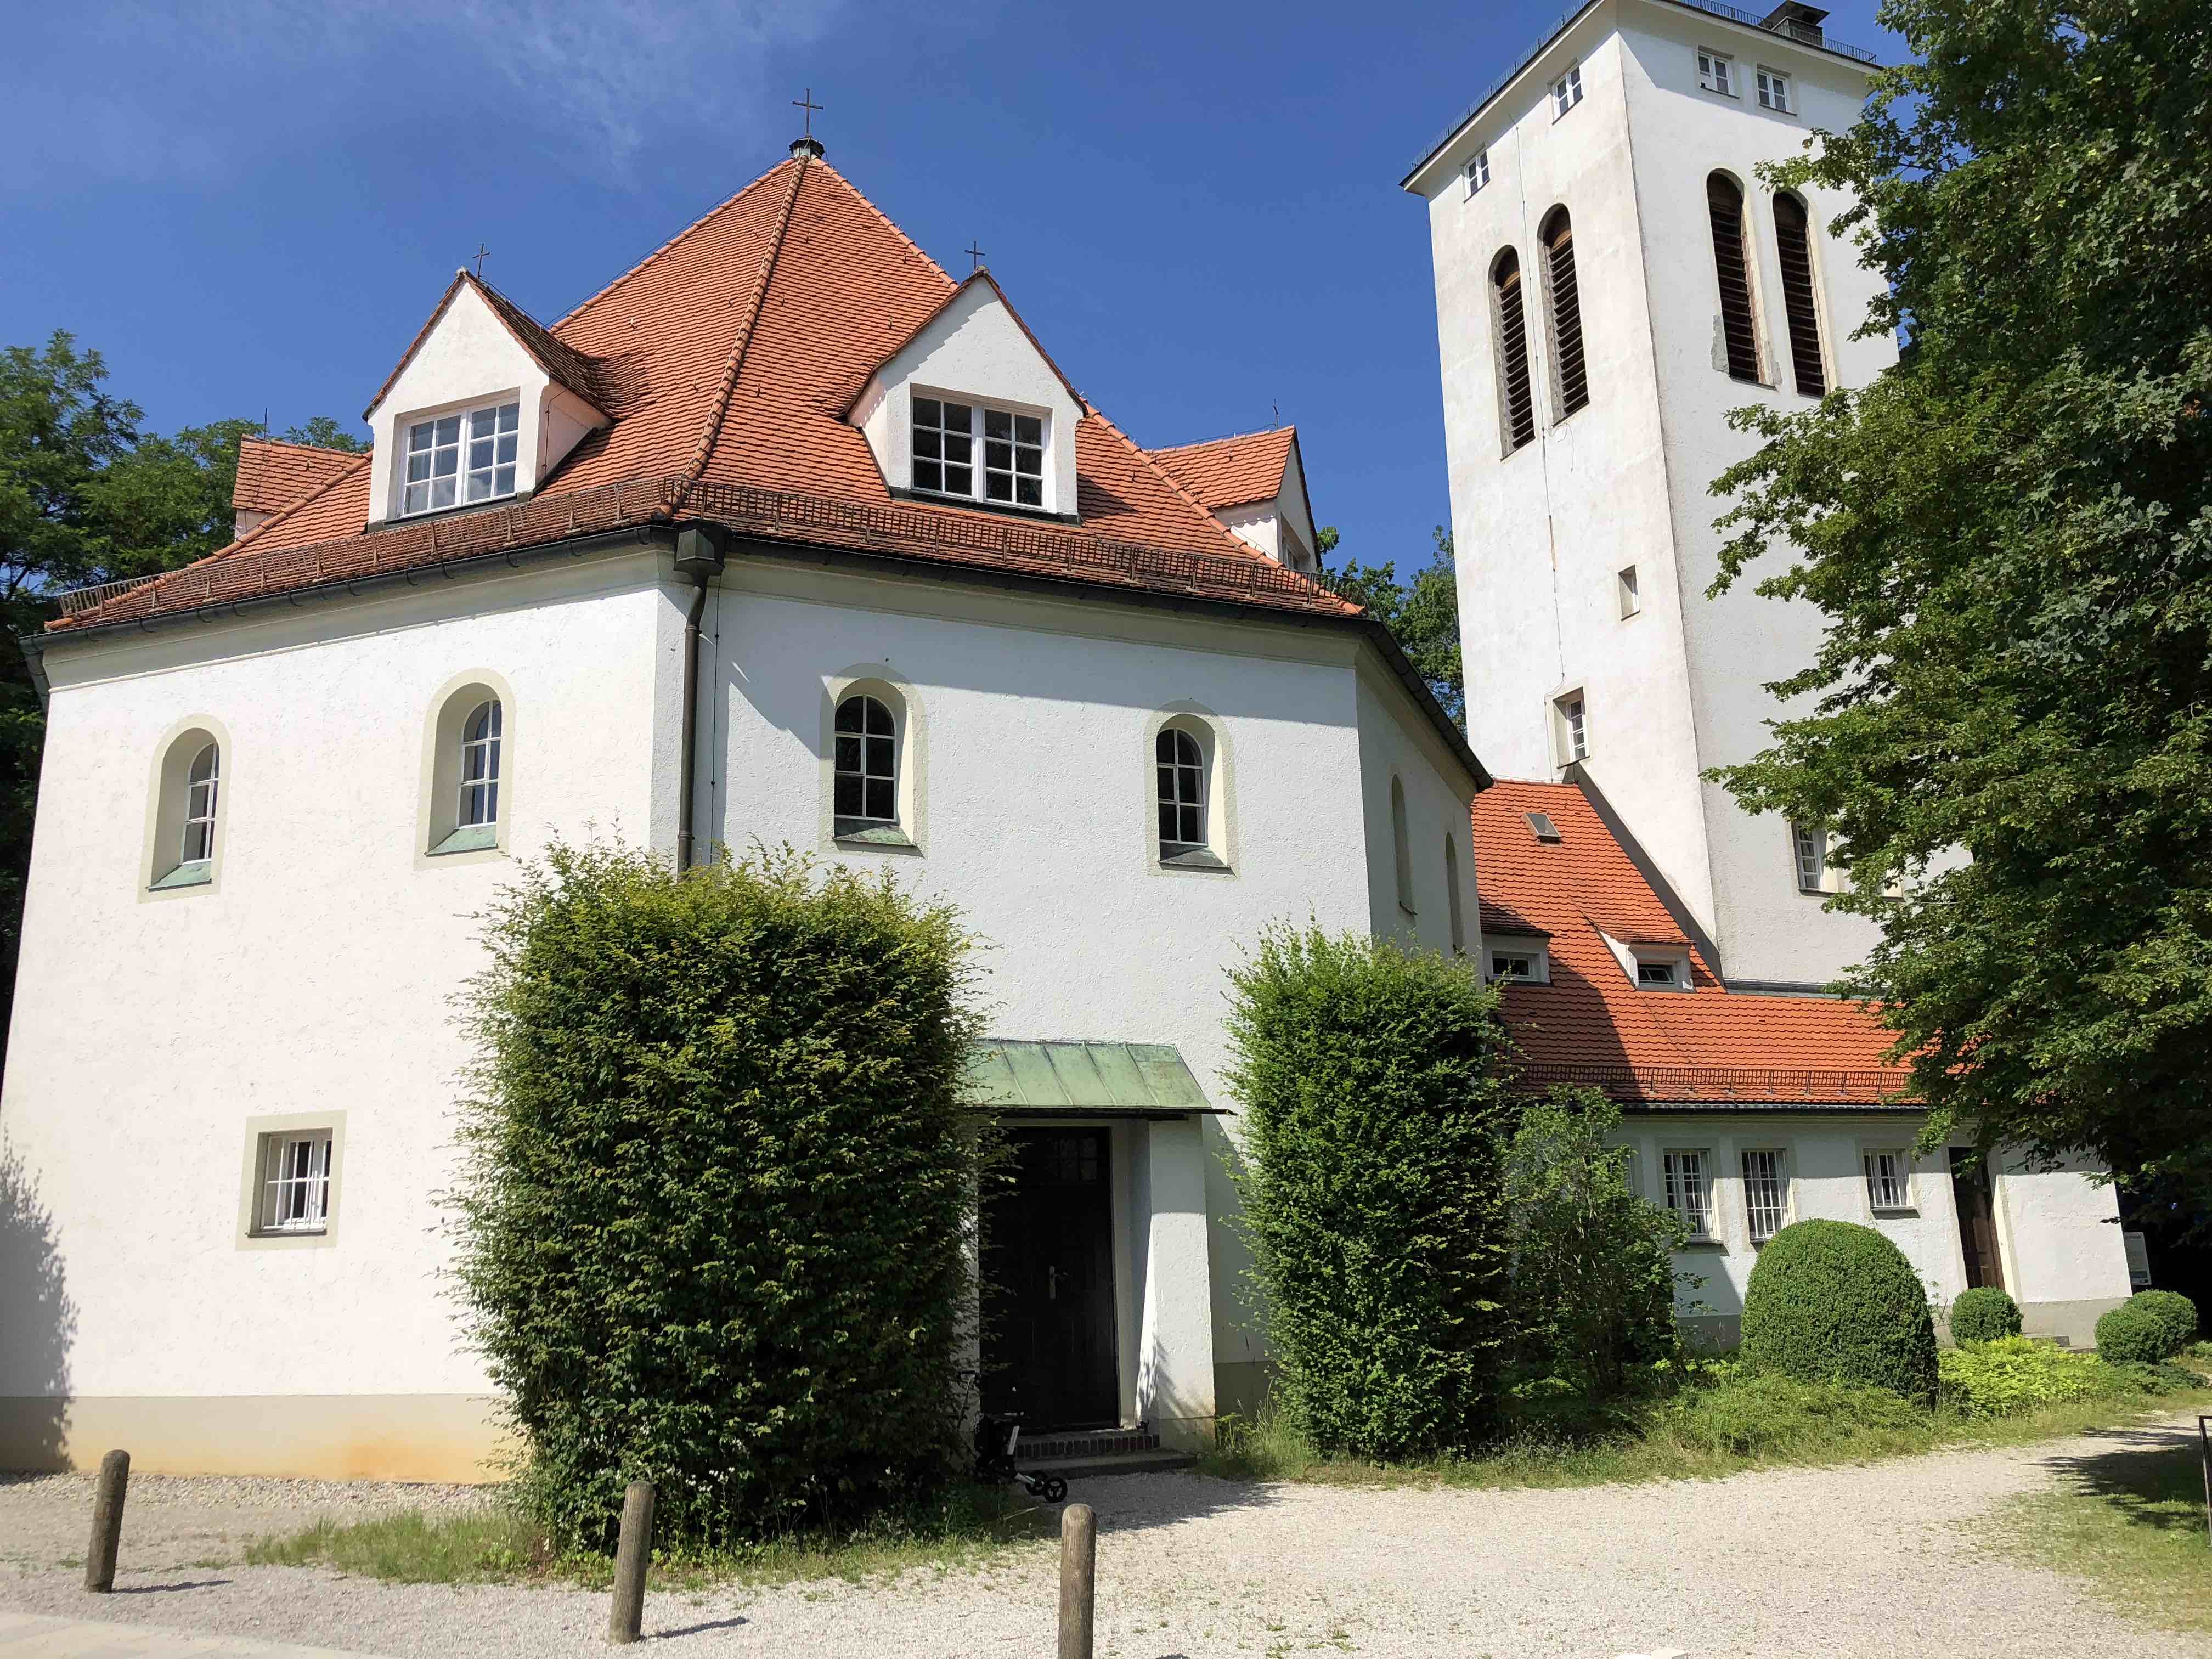 (c) Waldkirche-planegg.info